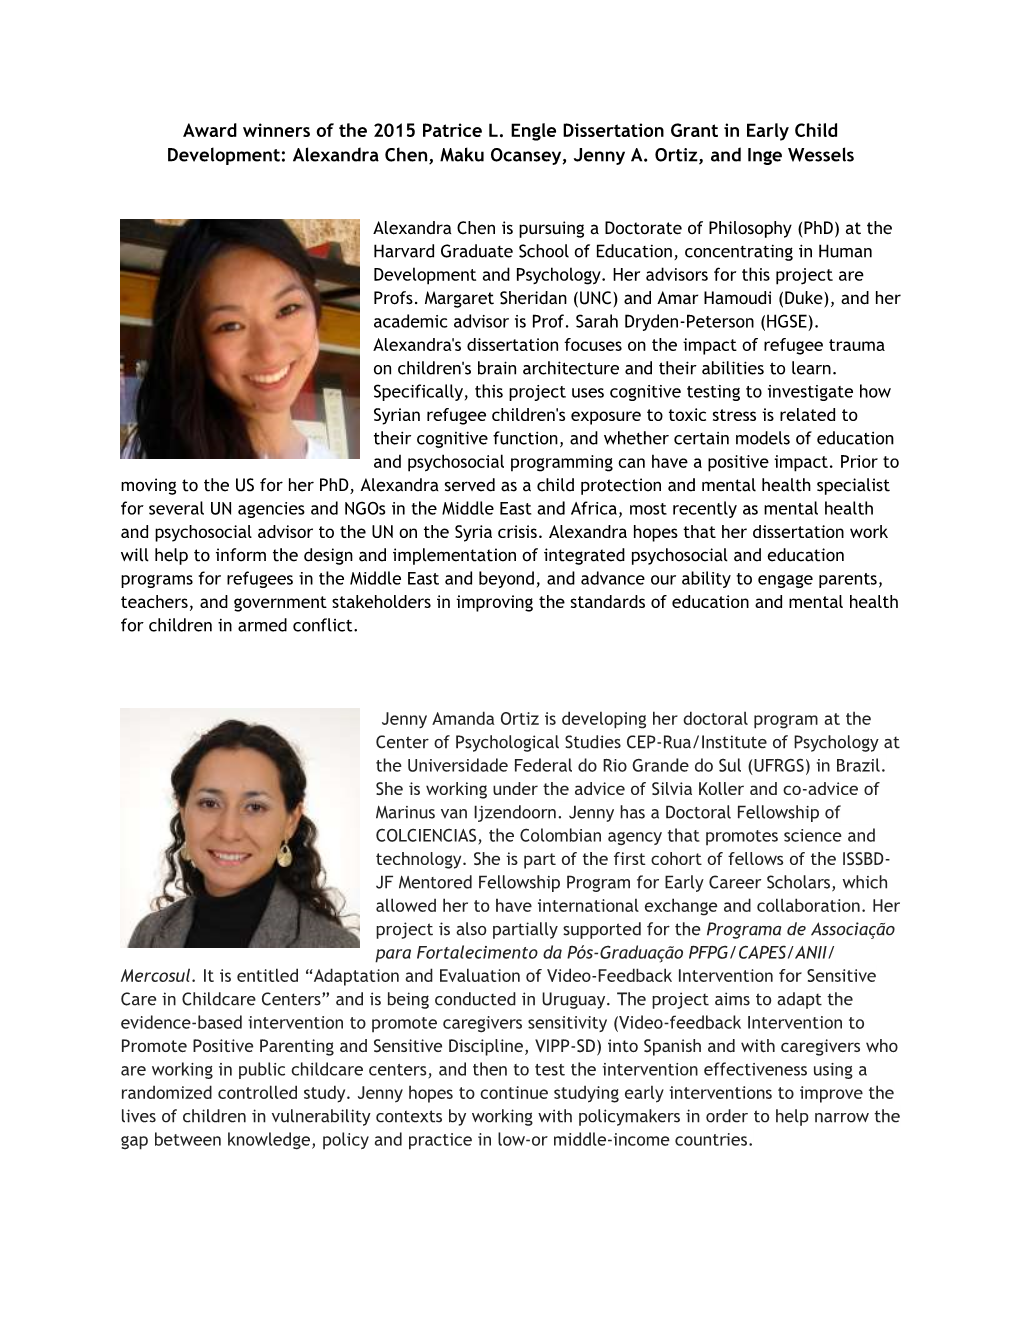 Award Winners of the 2015 Patrice L. Engle Dissertation Grant in Early Child Development: Alexandra Chen, Maku Ocansey, Jenny A